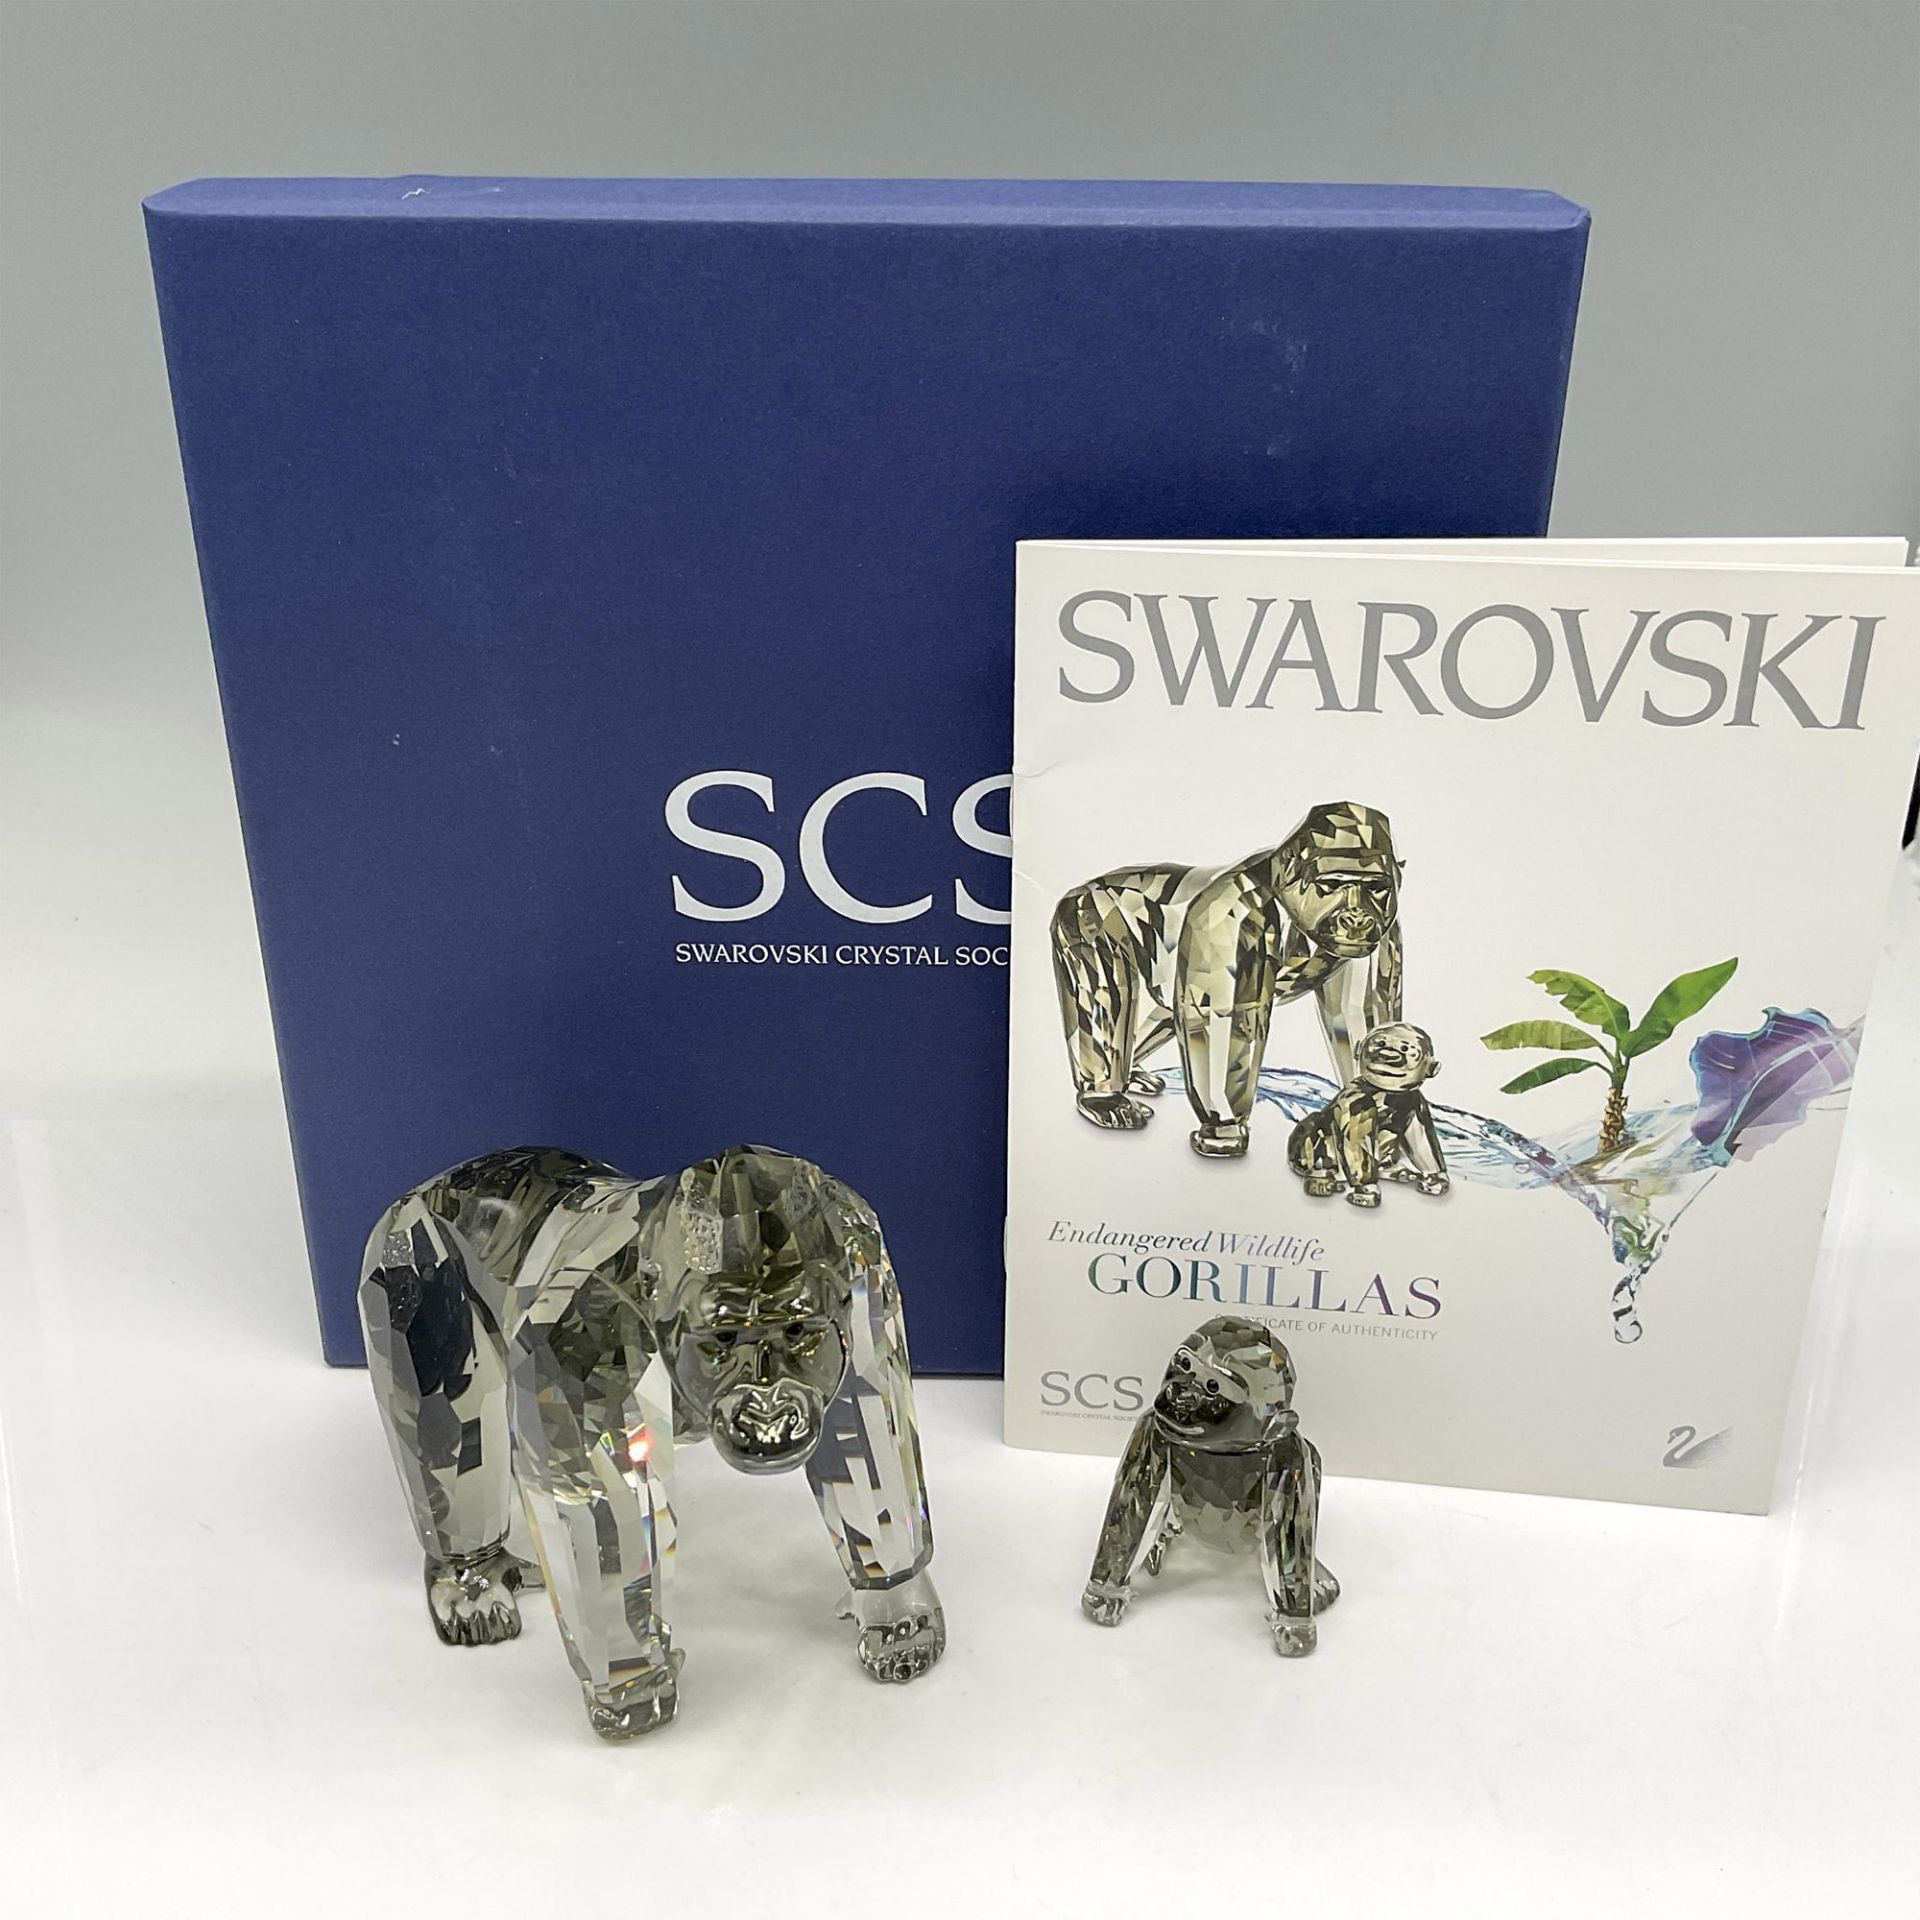 Swarovski Silver Crystal Society Figurine, Gorillas - Image 4 of 4